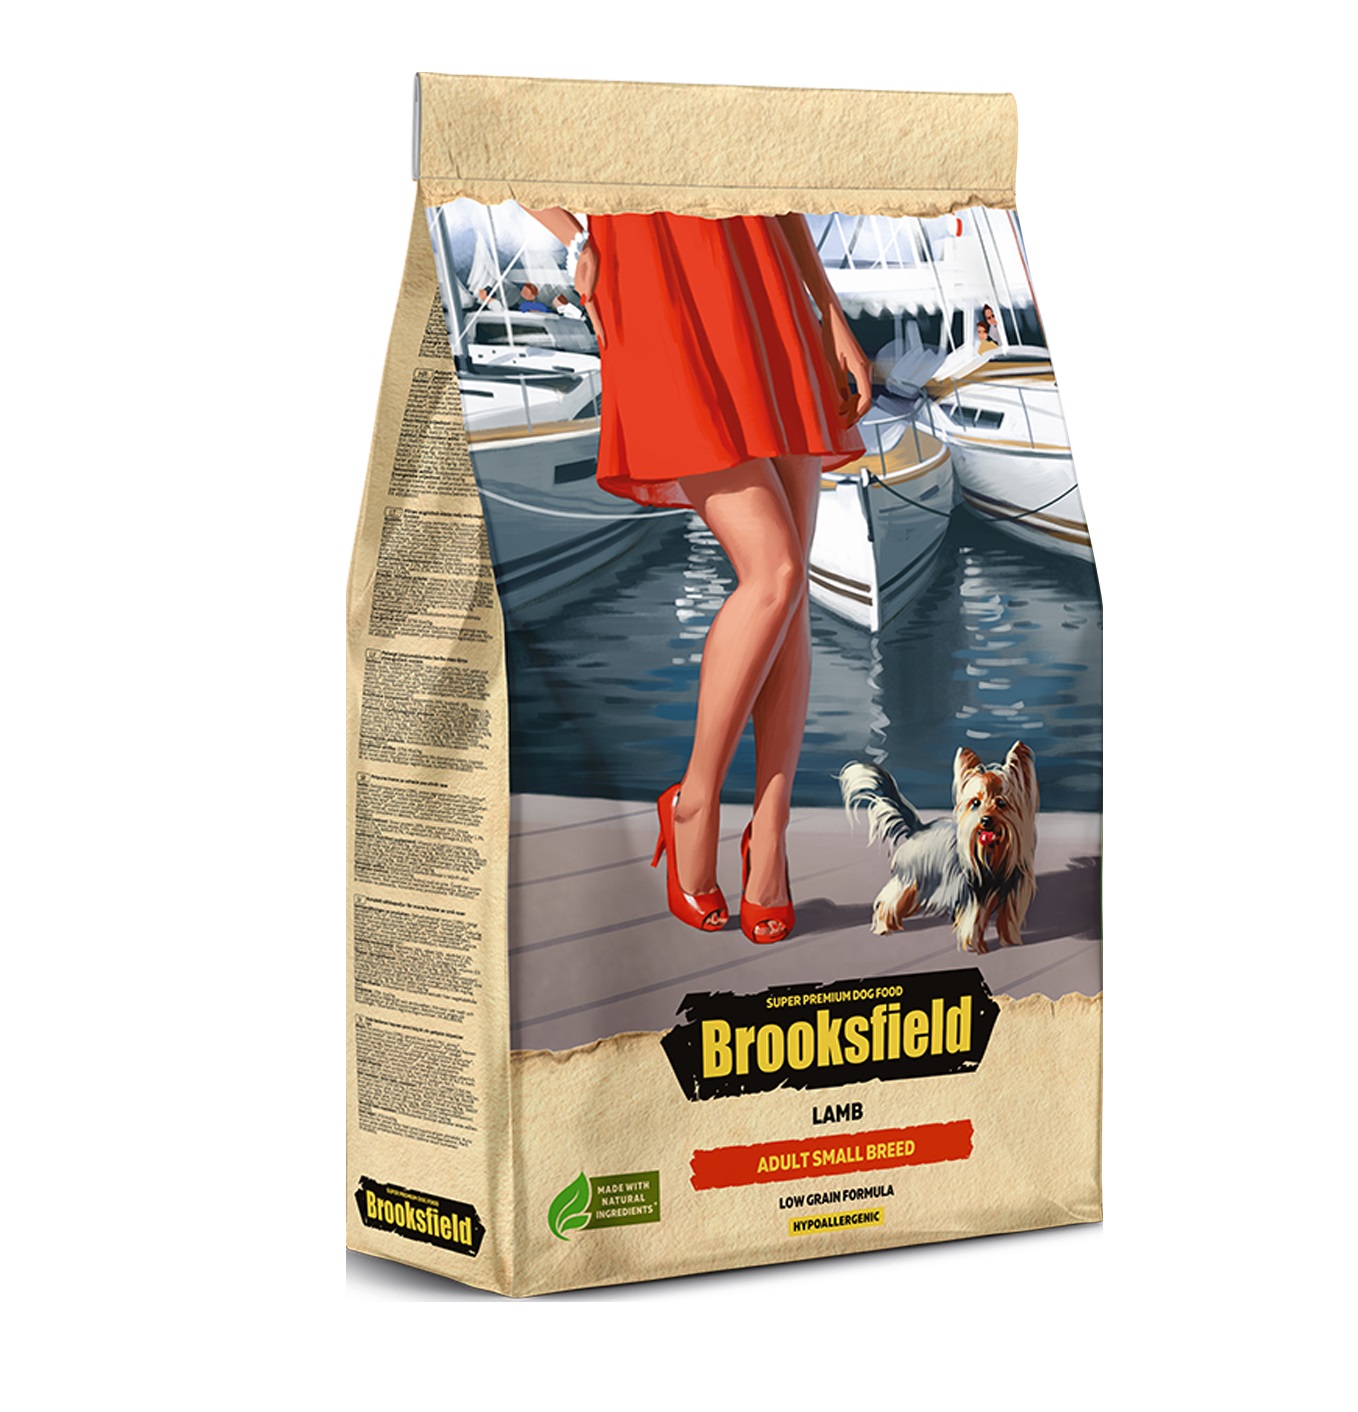 Бруксфилд 6кг - Ягненок - для Мелких собак (Brooksfield)